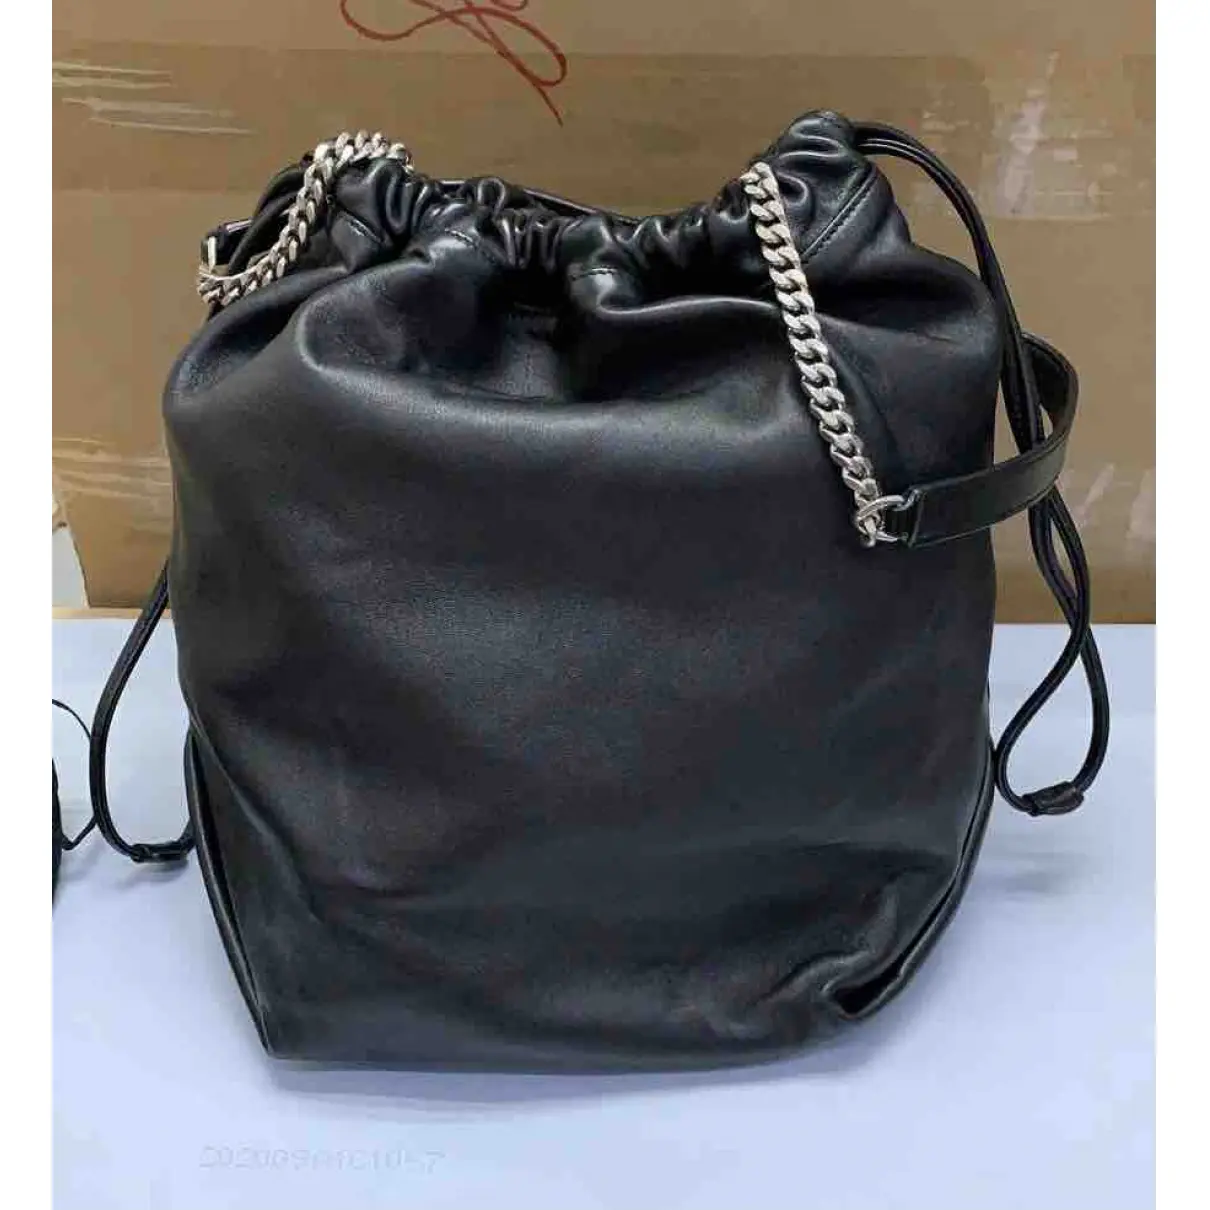 Buy Saint Laurent Teddy leather handbag online